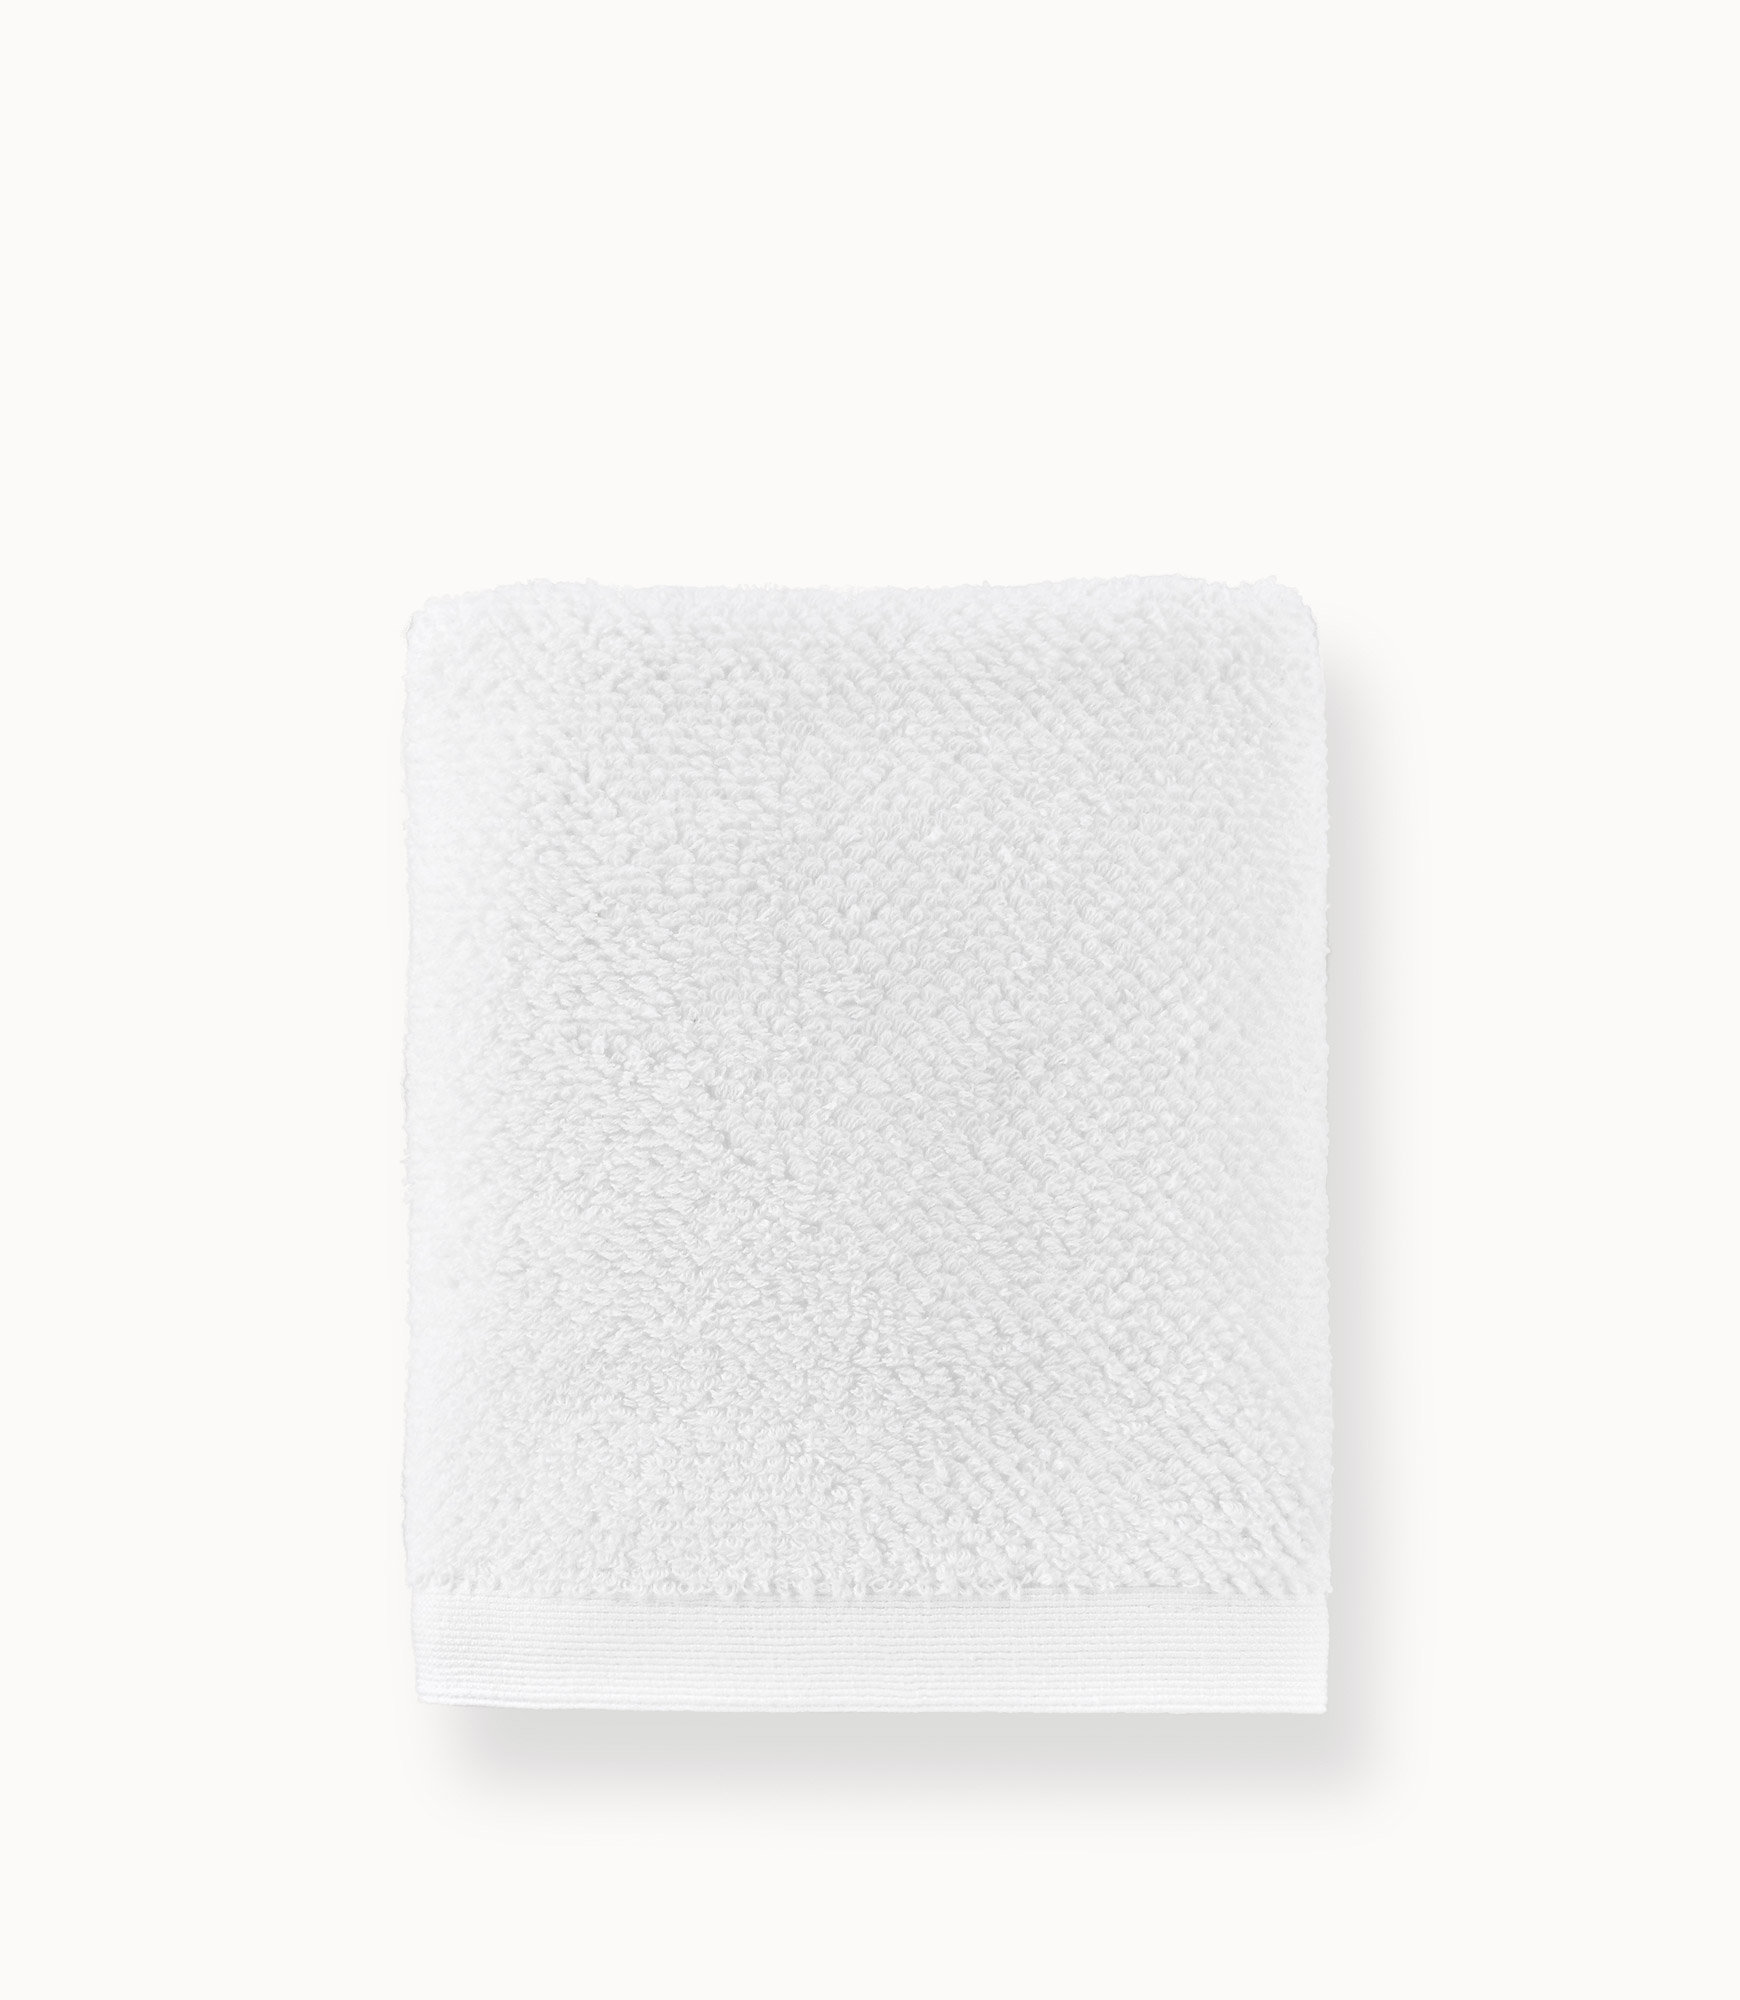 Peacock Alley Jubilee Hand Towel - White